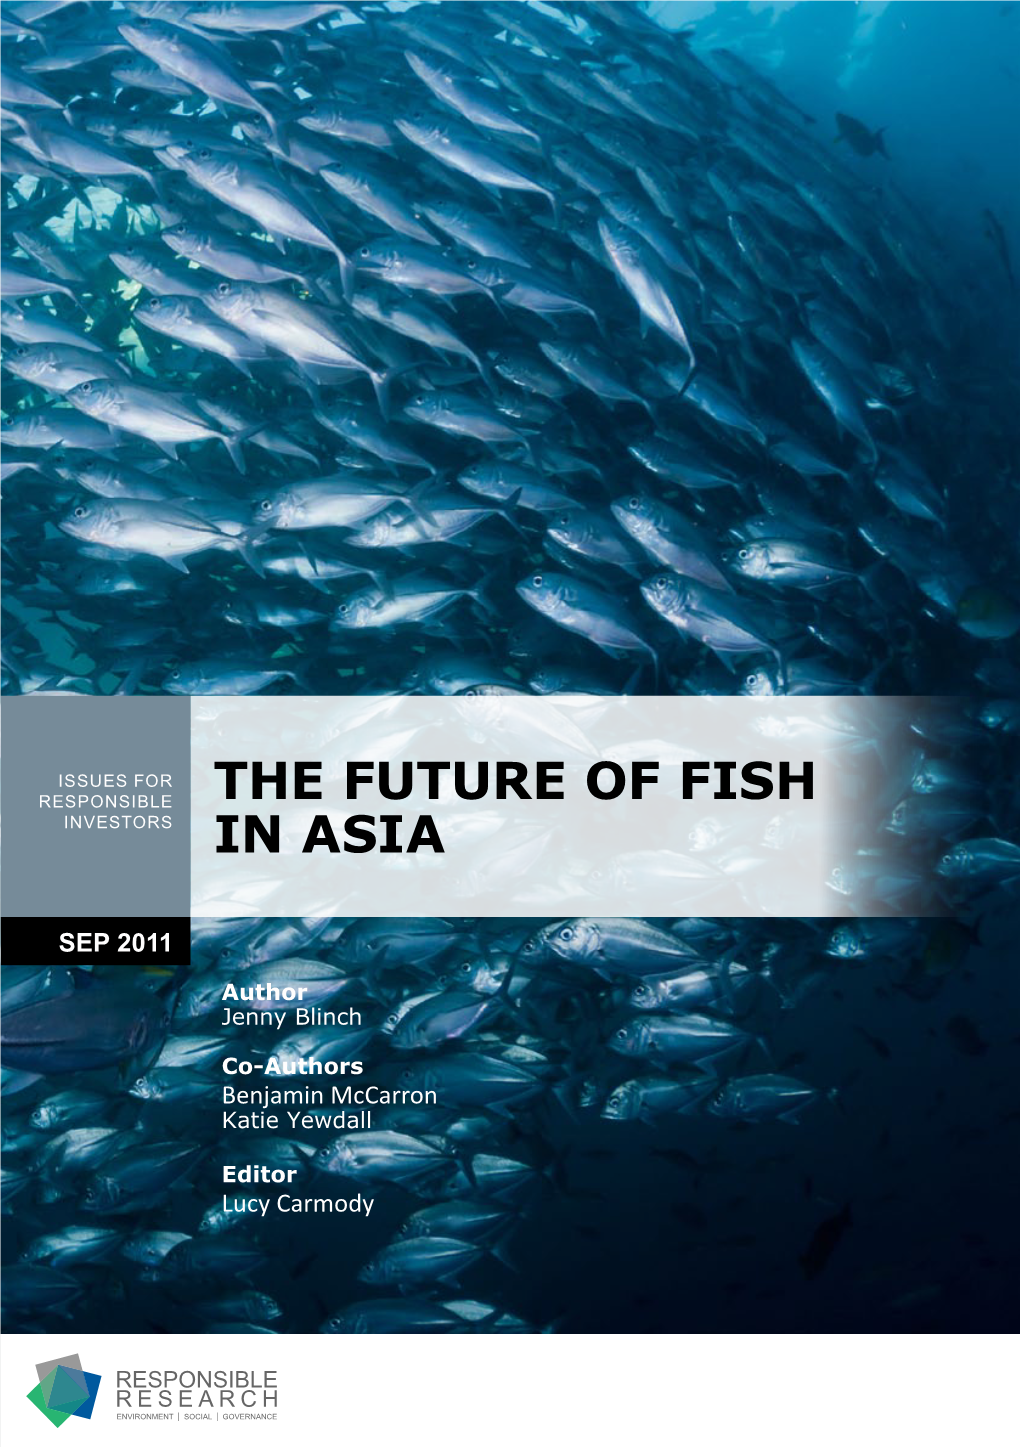 The Future of Fish in Asia